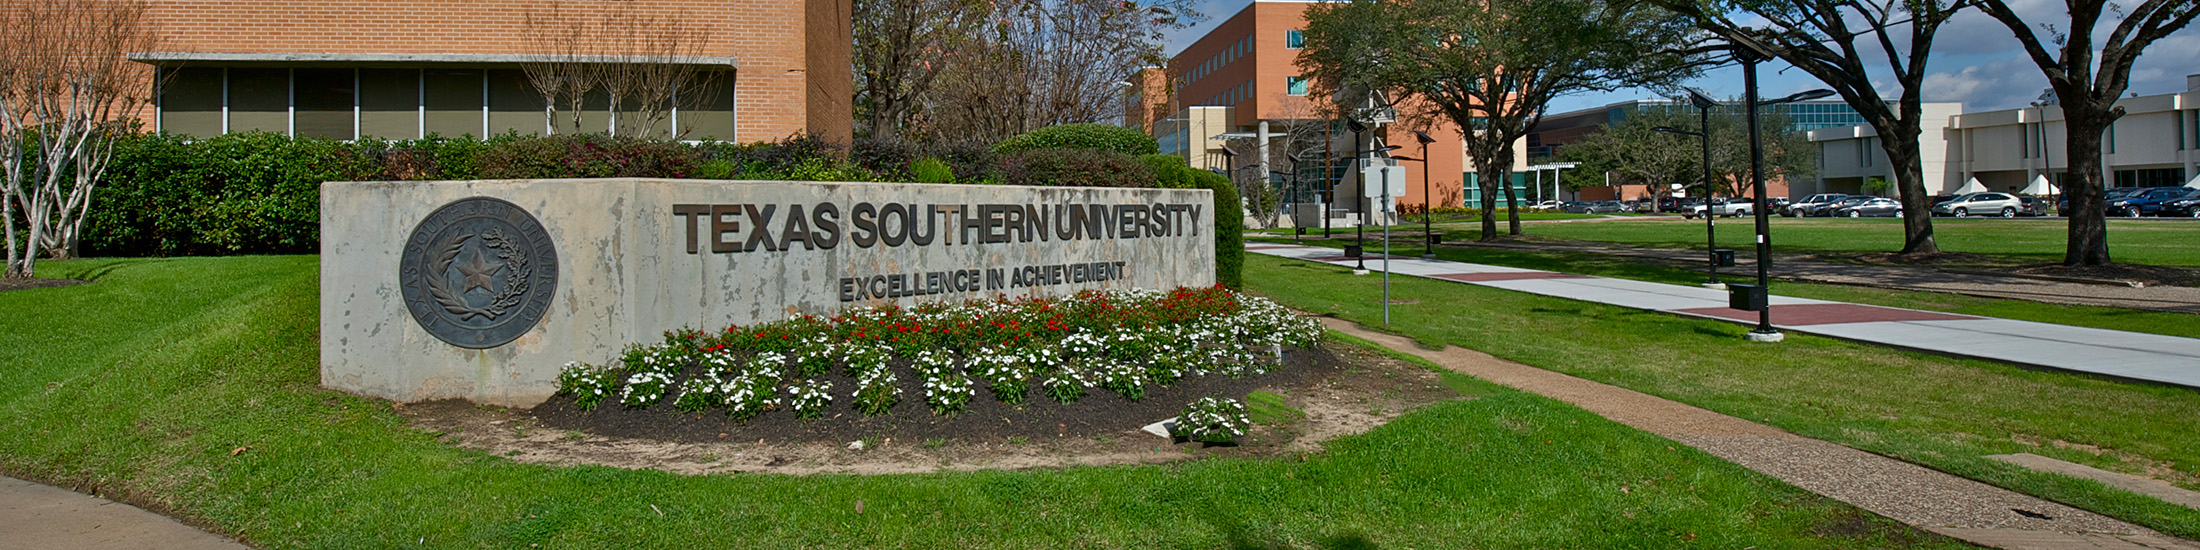 Texas Southern University Gate 